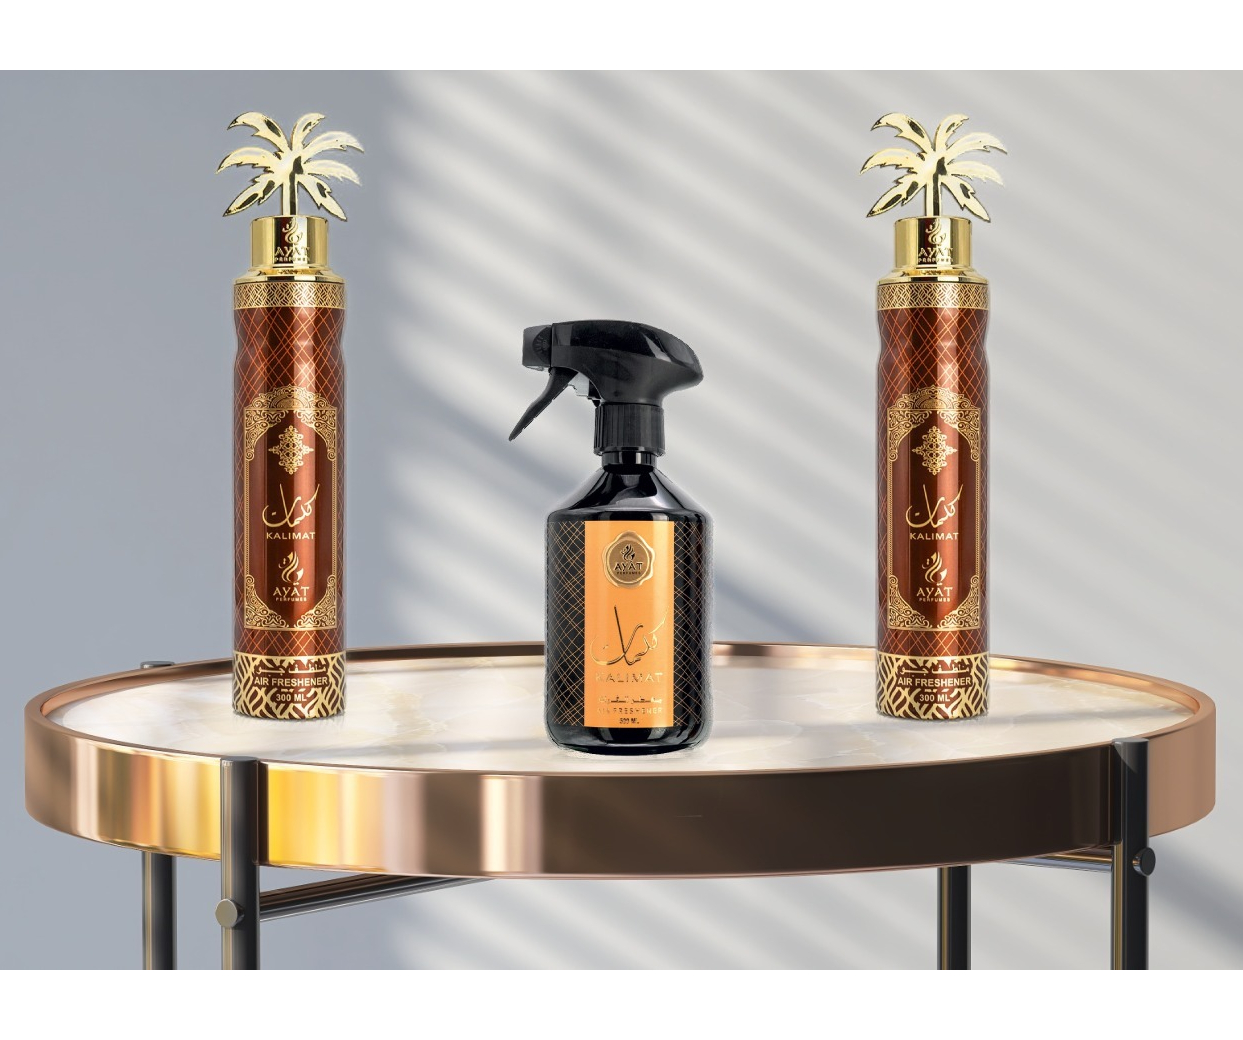 Air freshener “KALIMAT”, AYAT 300 ml. – Arabic Perfume – Nišiniai Kvepalai